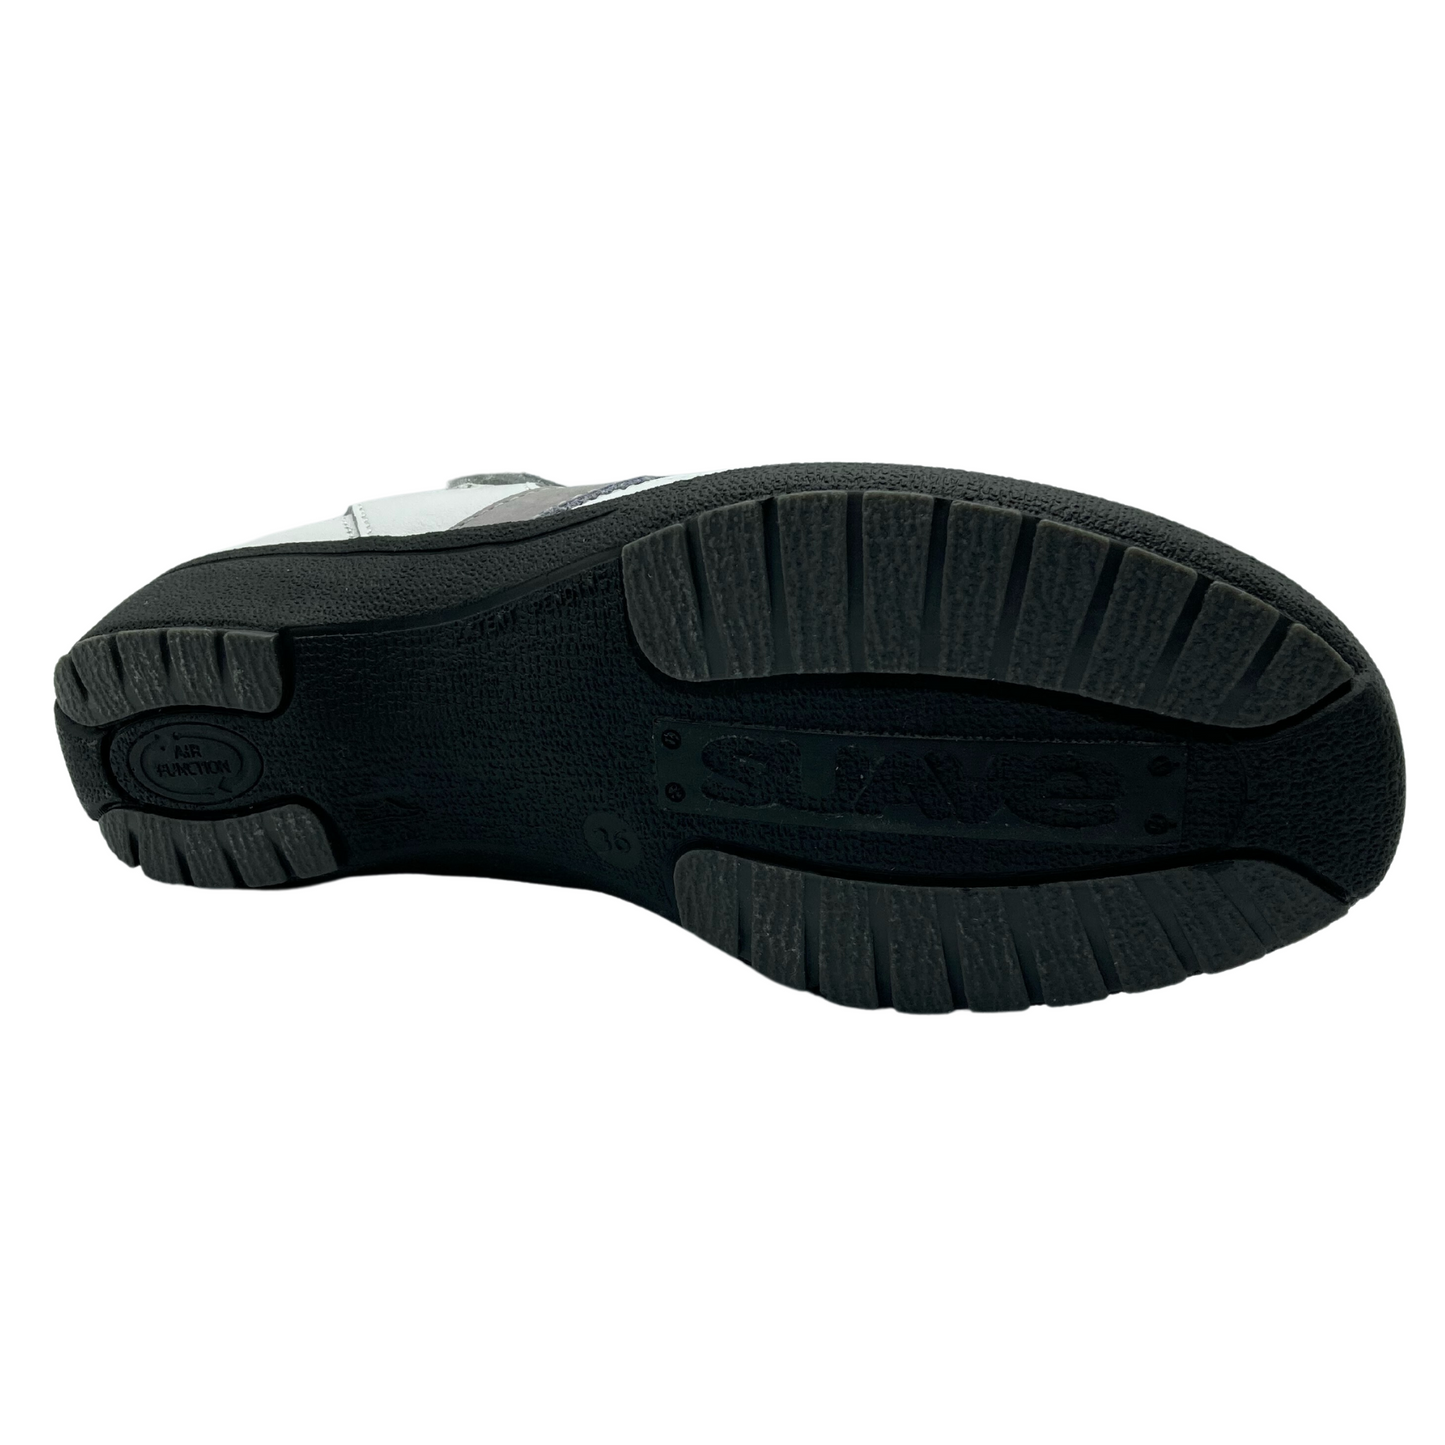 Bottom view of the sandal shoe, black rubber tread